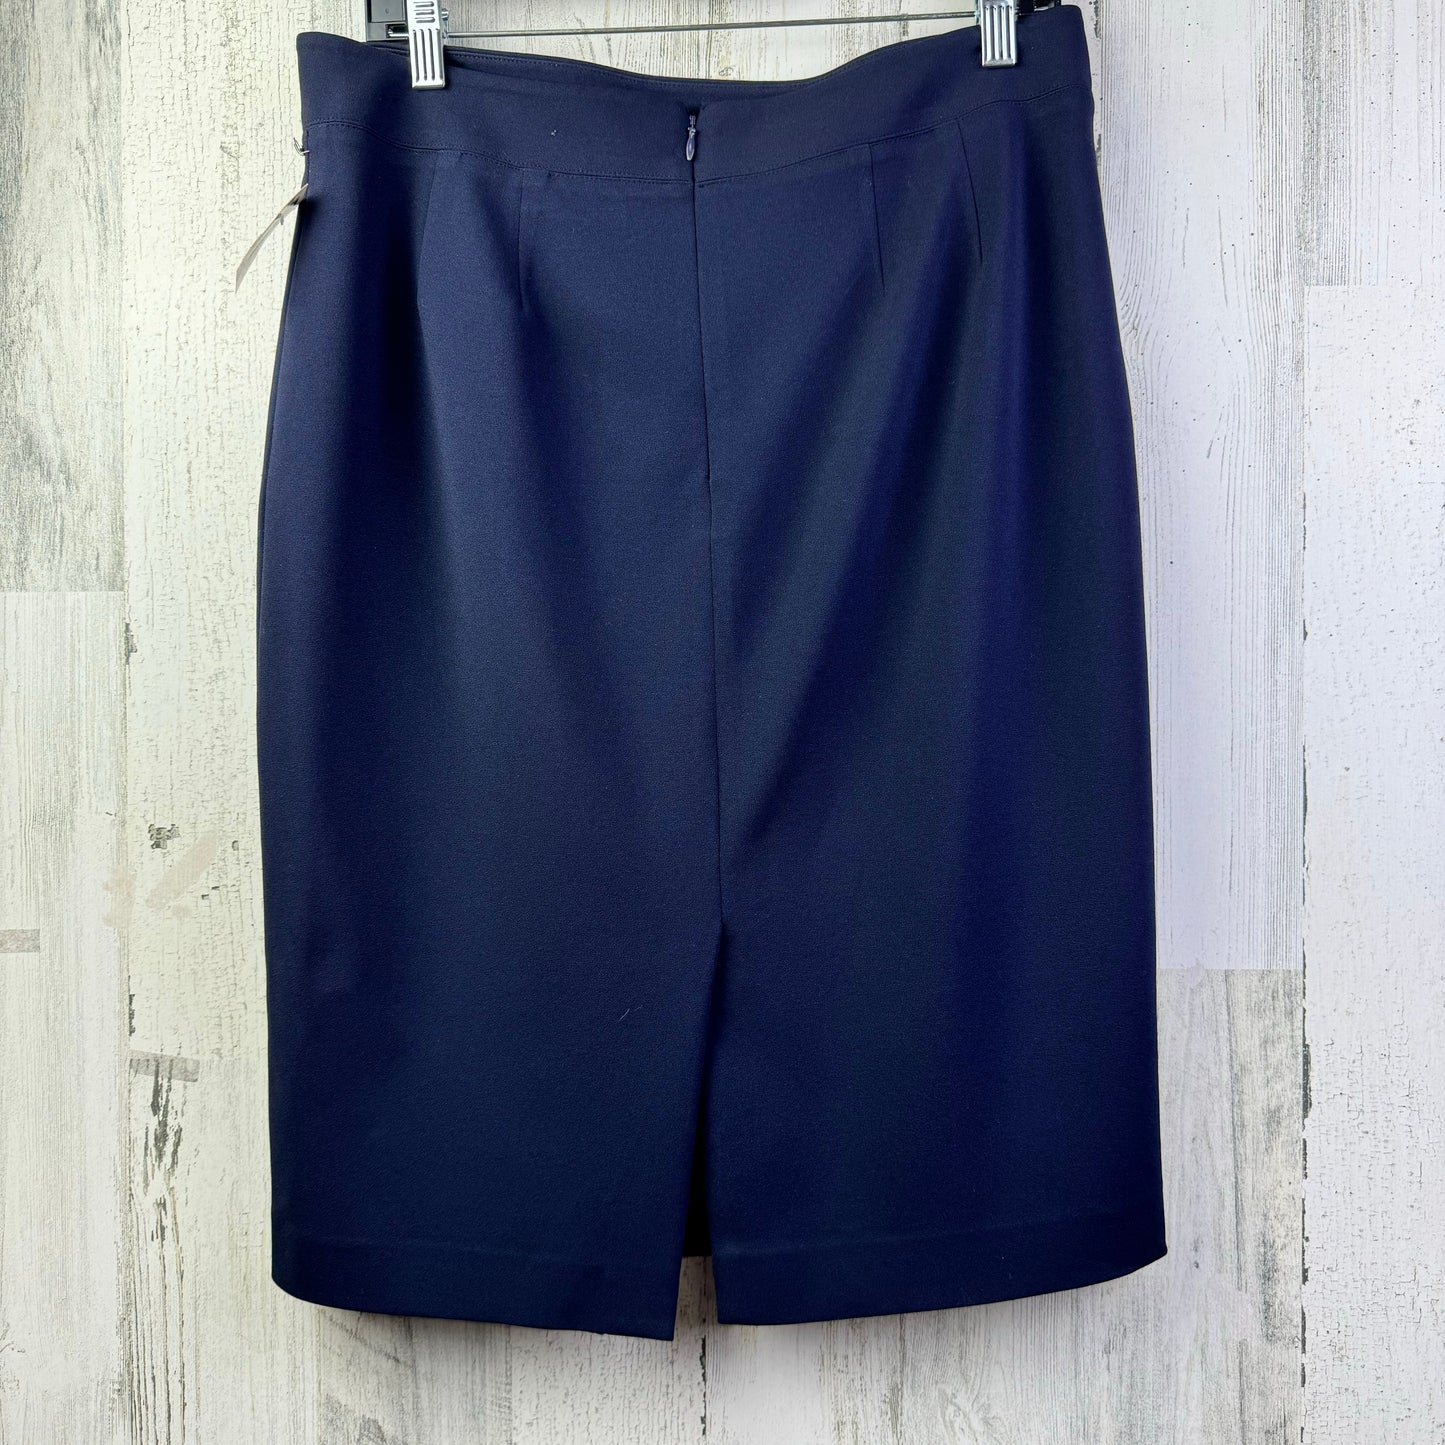 Skirt Mini & Short By Dkny  Size: 8